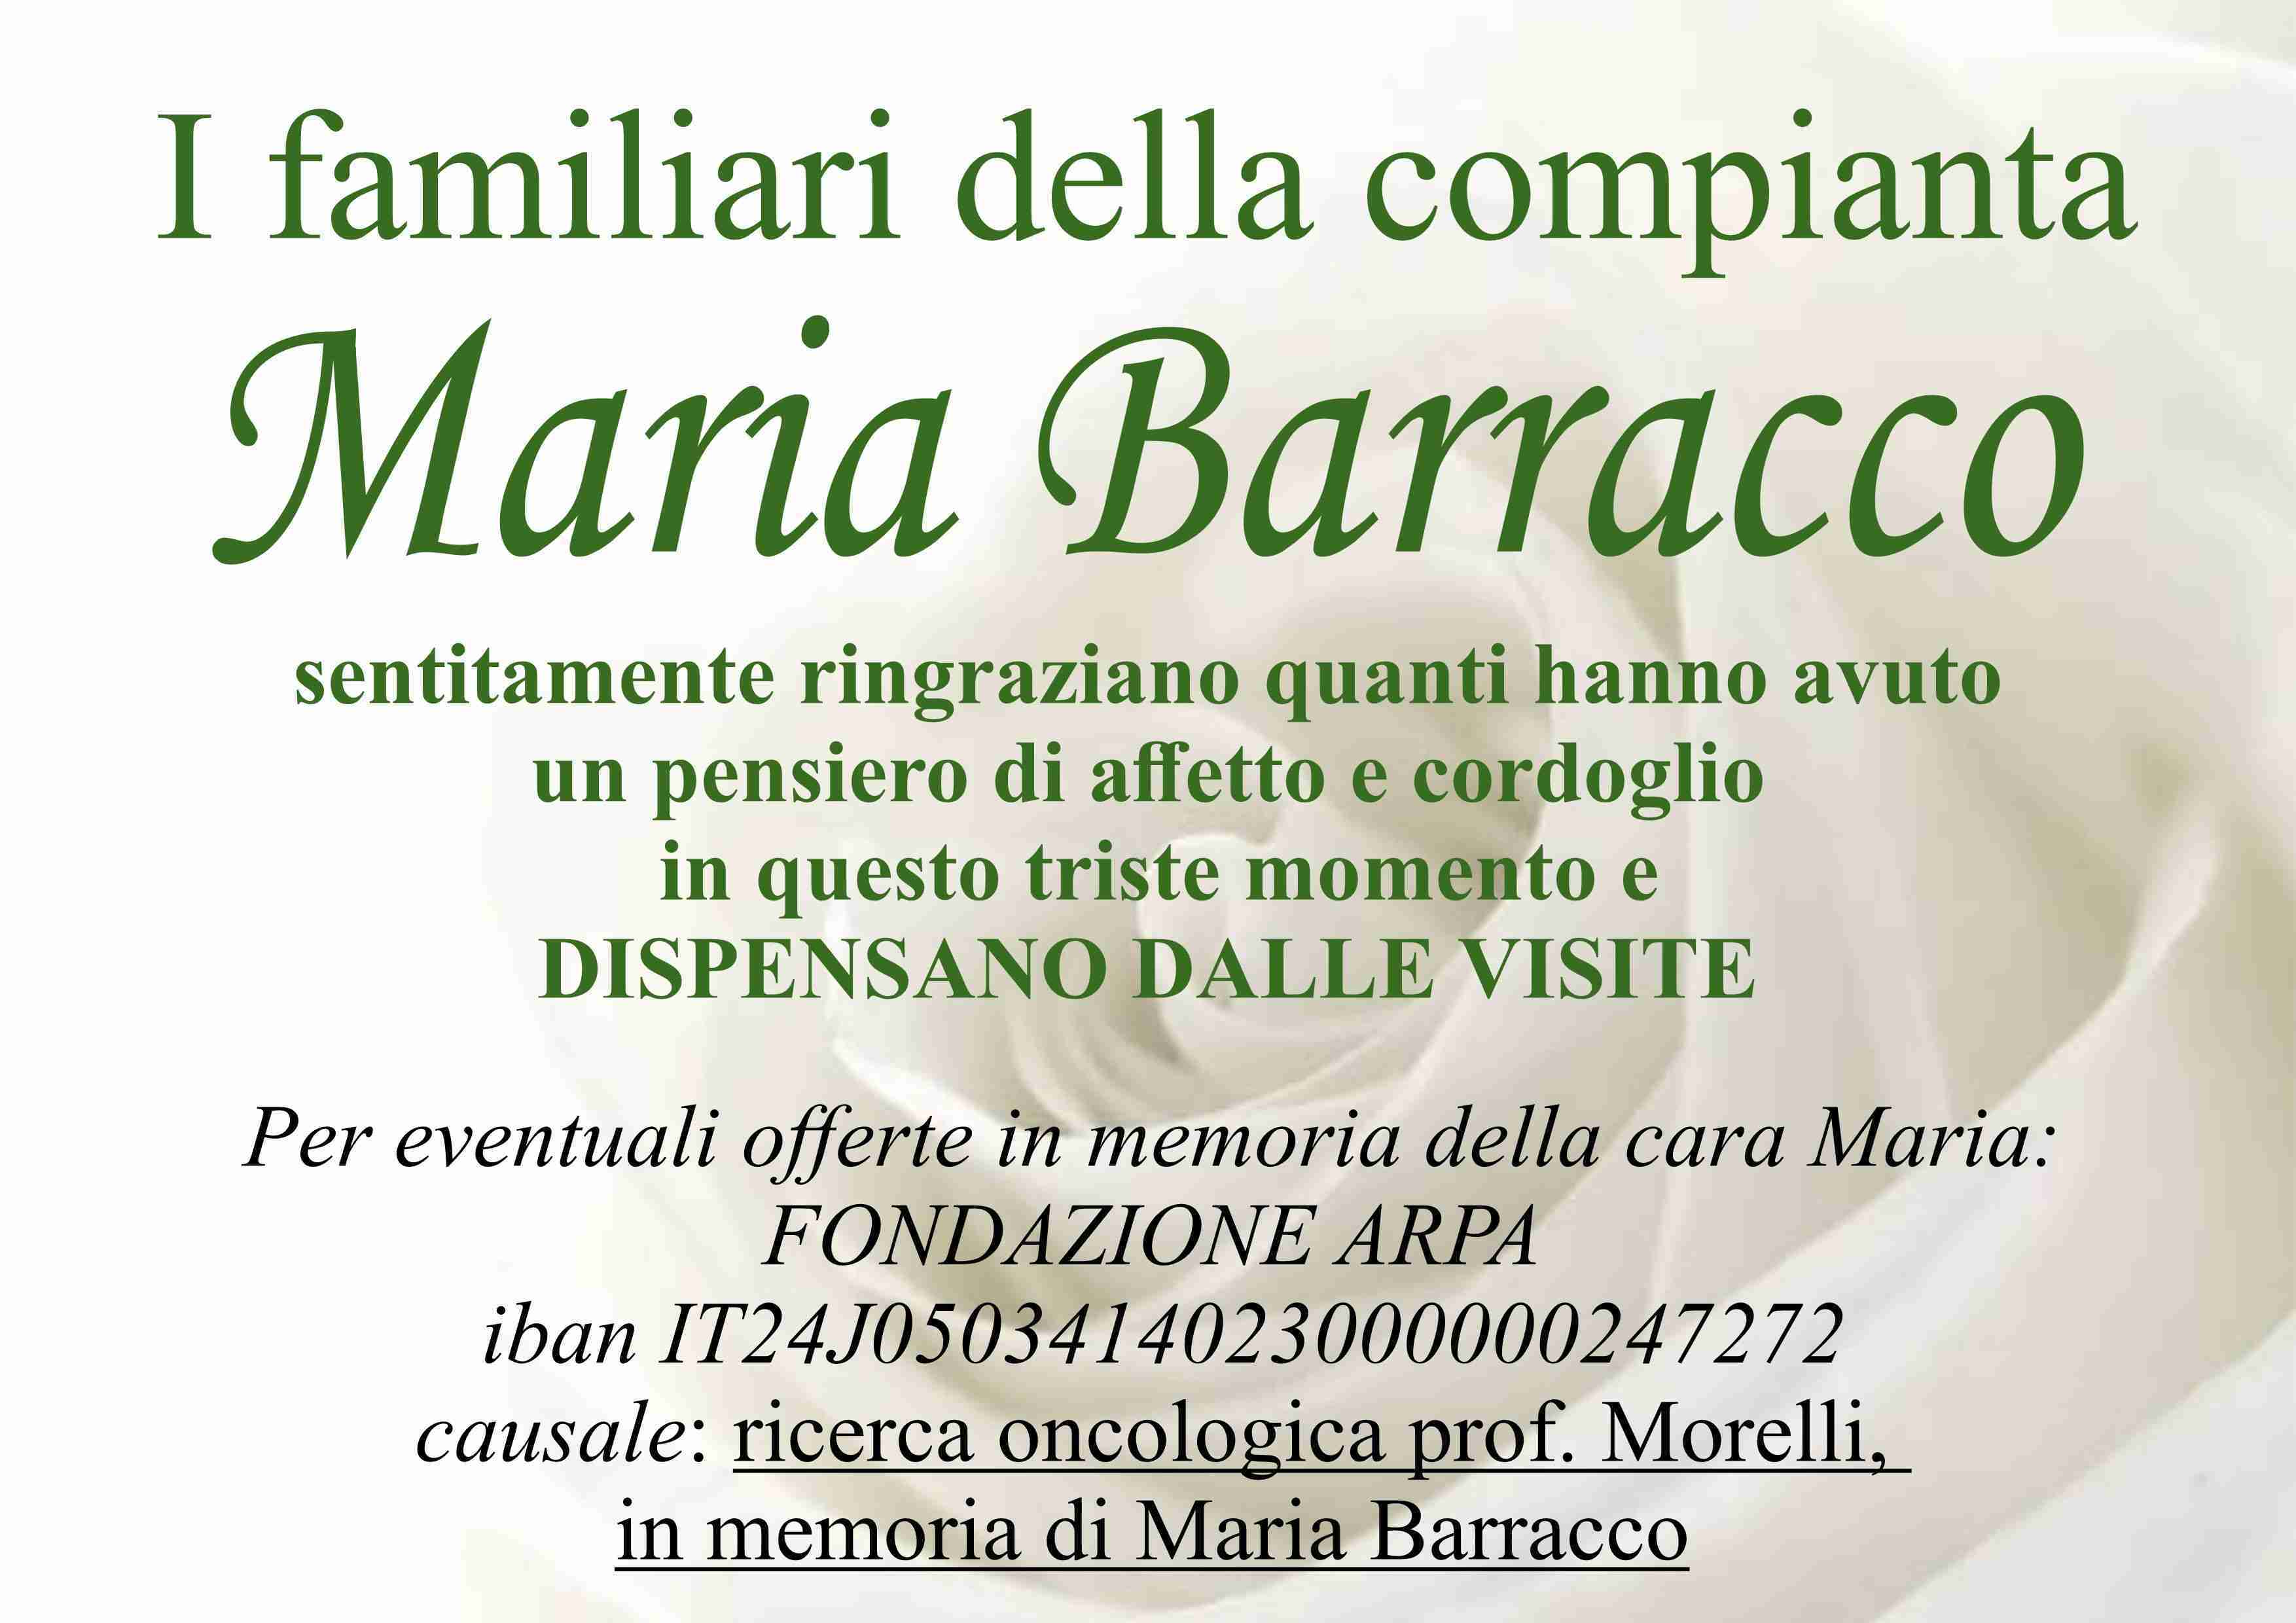 Maria Barracco